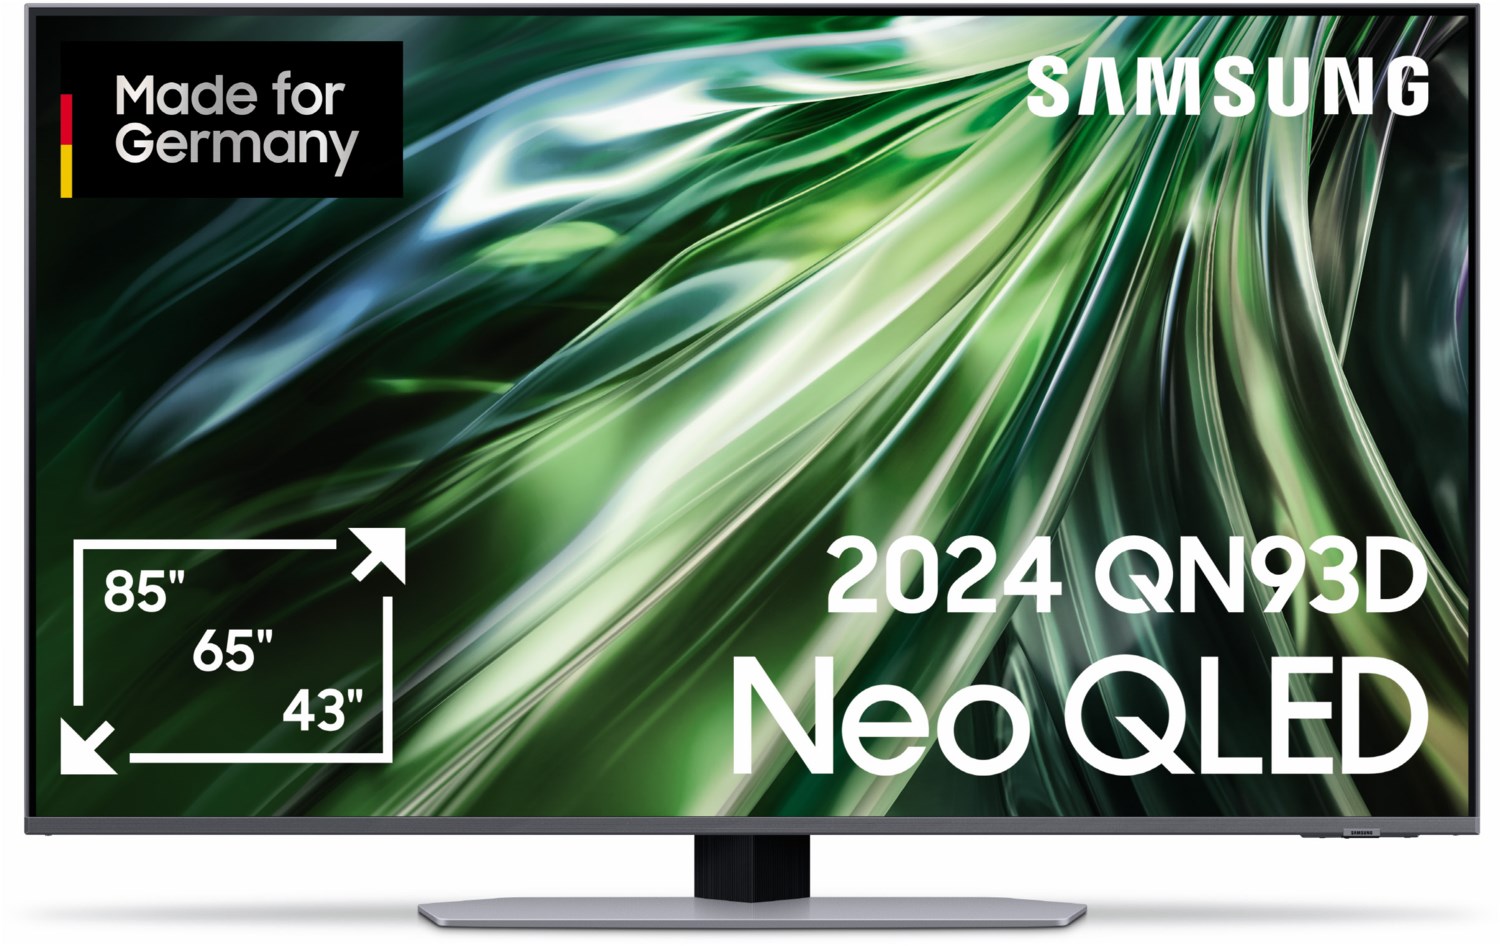 Samsung Neo QLED-TV 50 Zoll (125 cm) QN93D Modell 2024 carbon silber